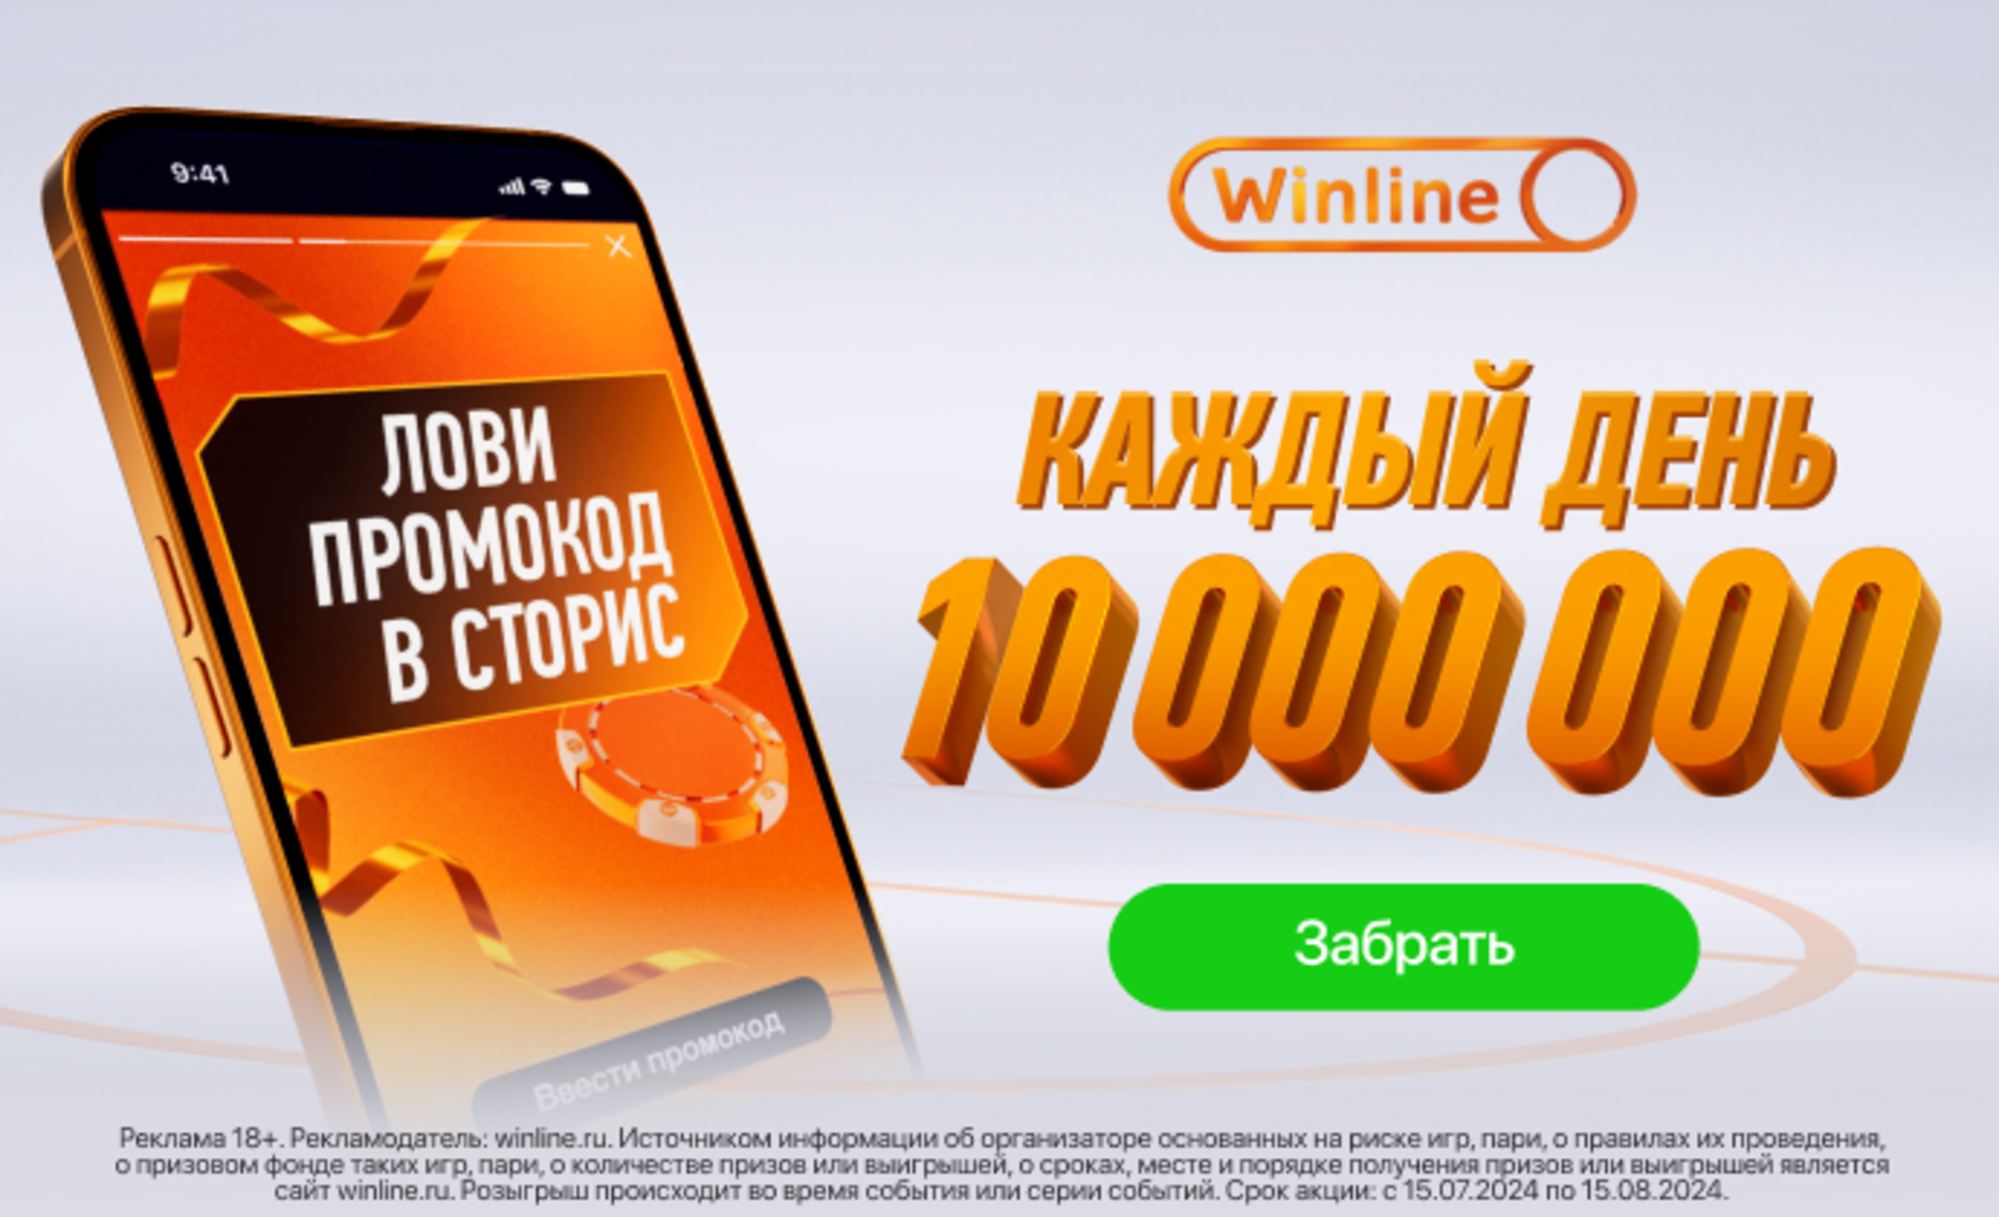 Промокод в Винлайн:  фрибет до 10000 рублей в приложении